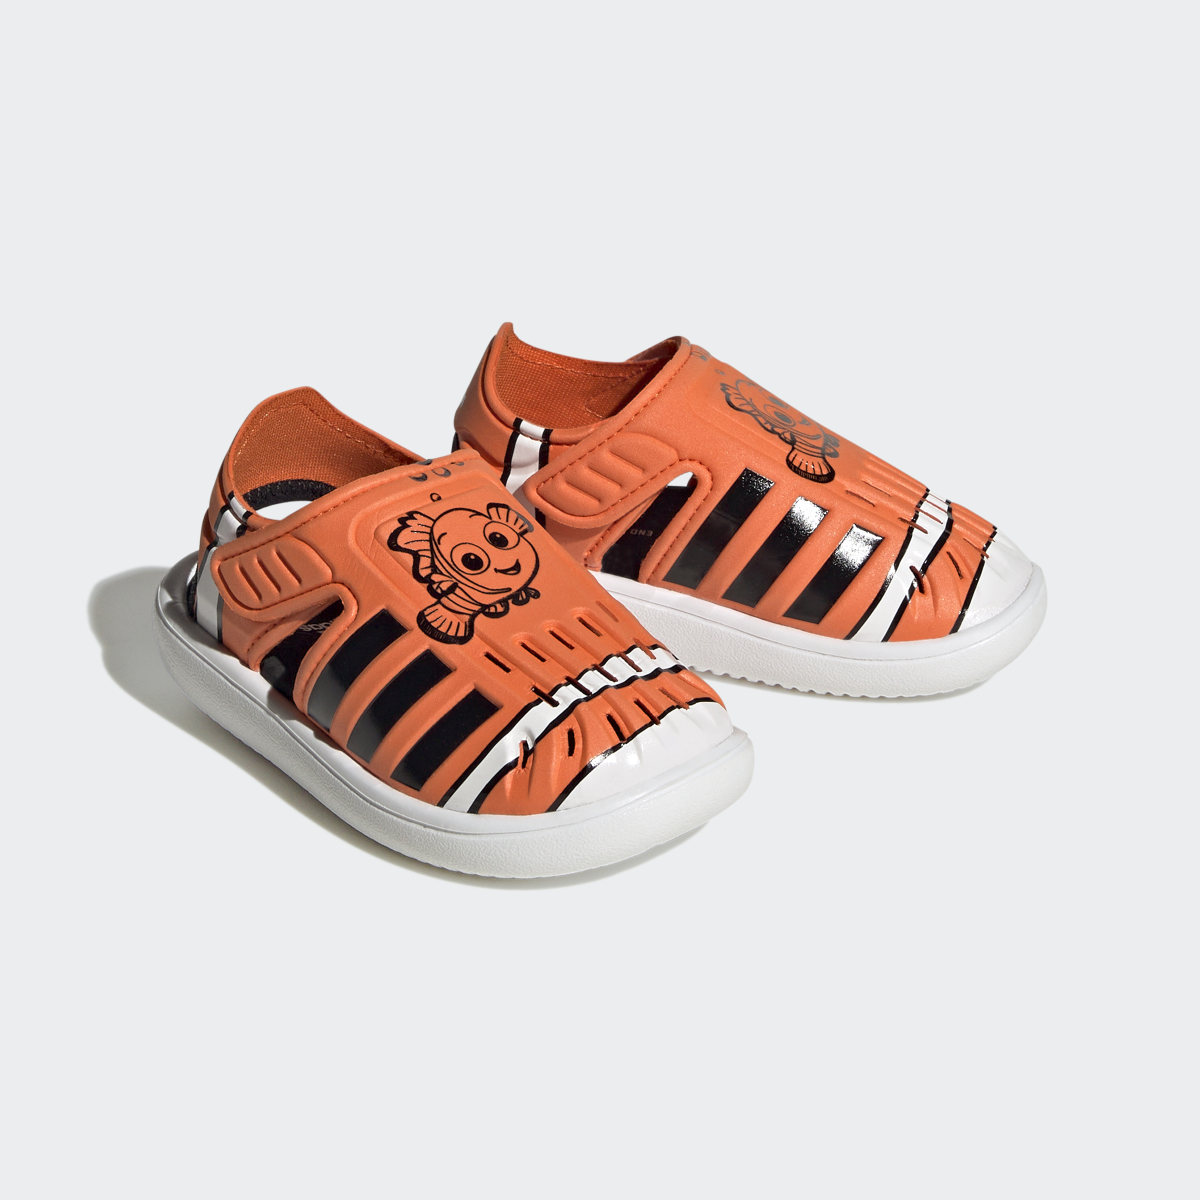 Adidas Findet Nemo Closed Toe Summer Sandale. 5